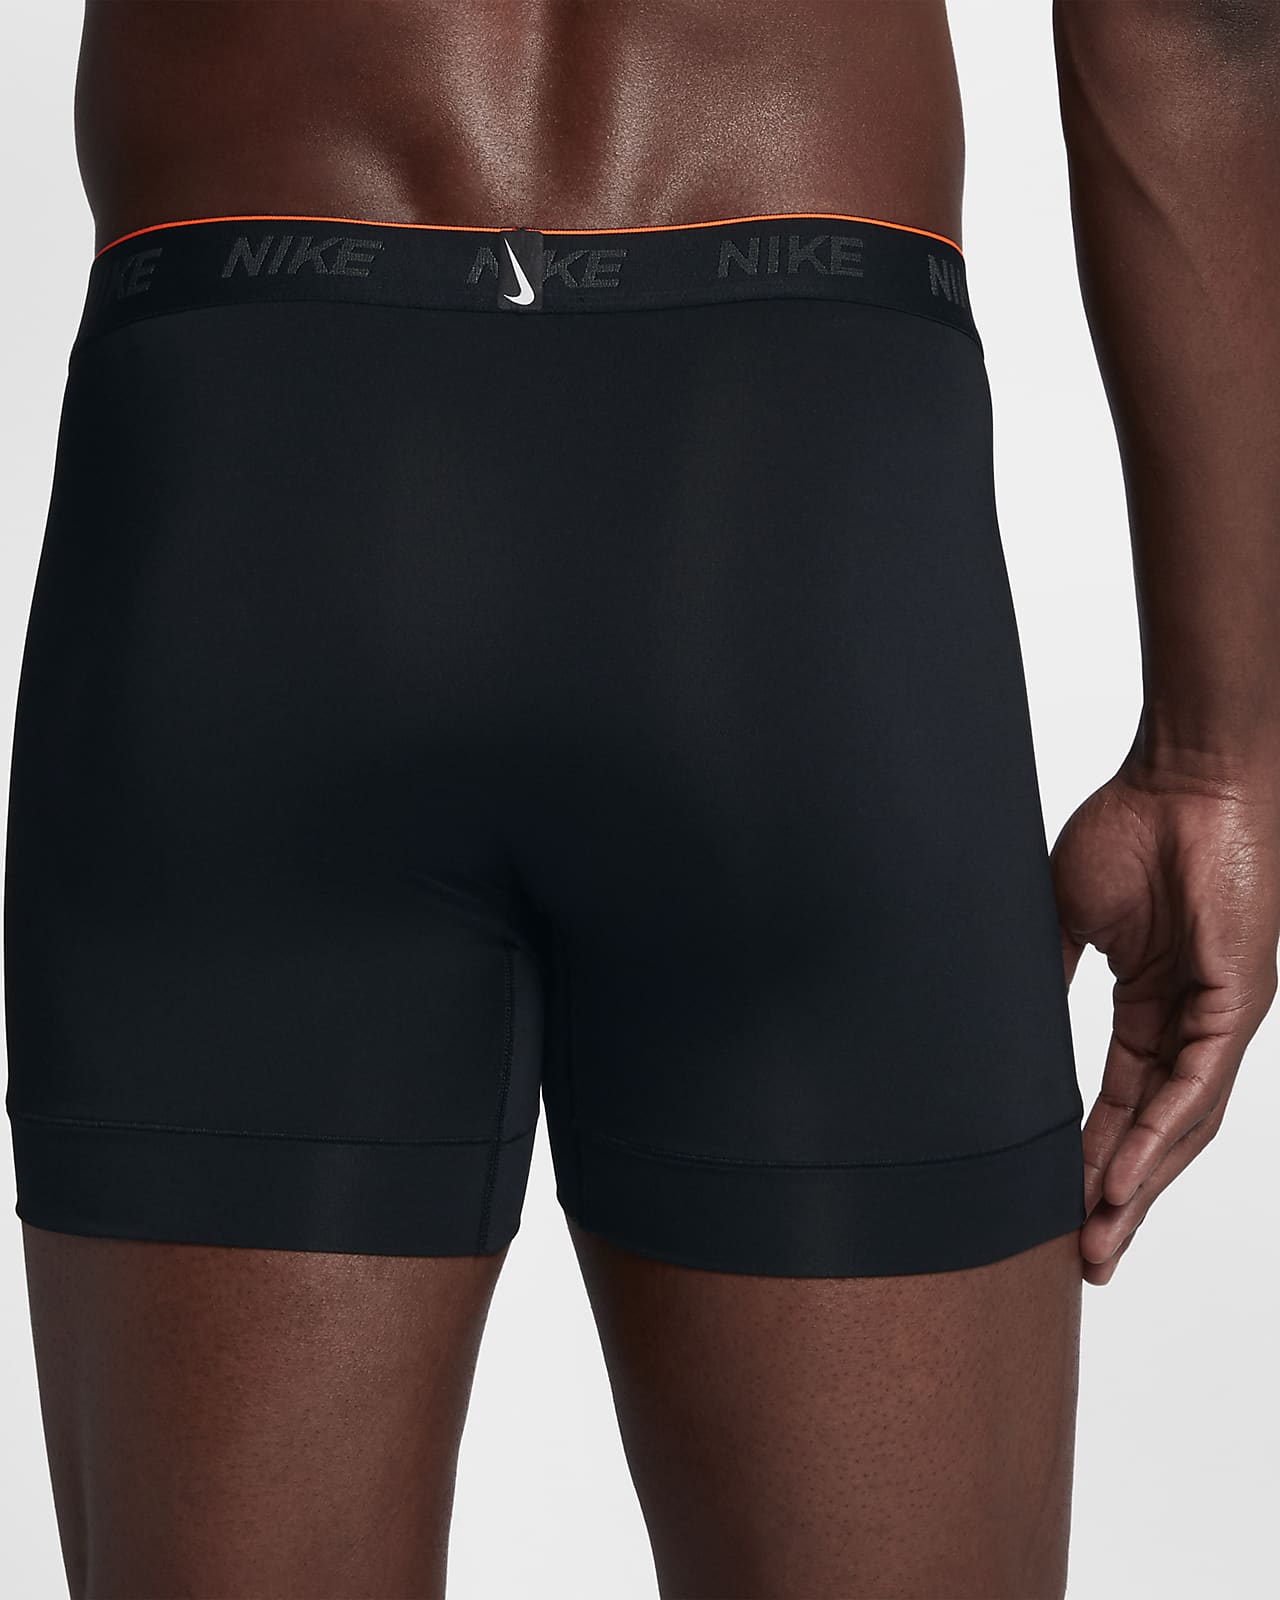 Buy Men's Nike Underwear Online